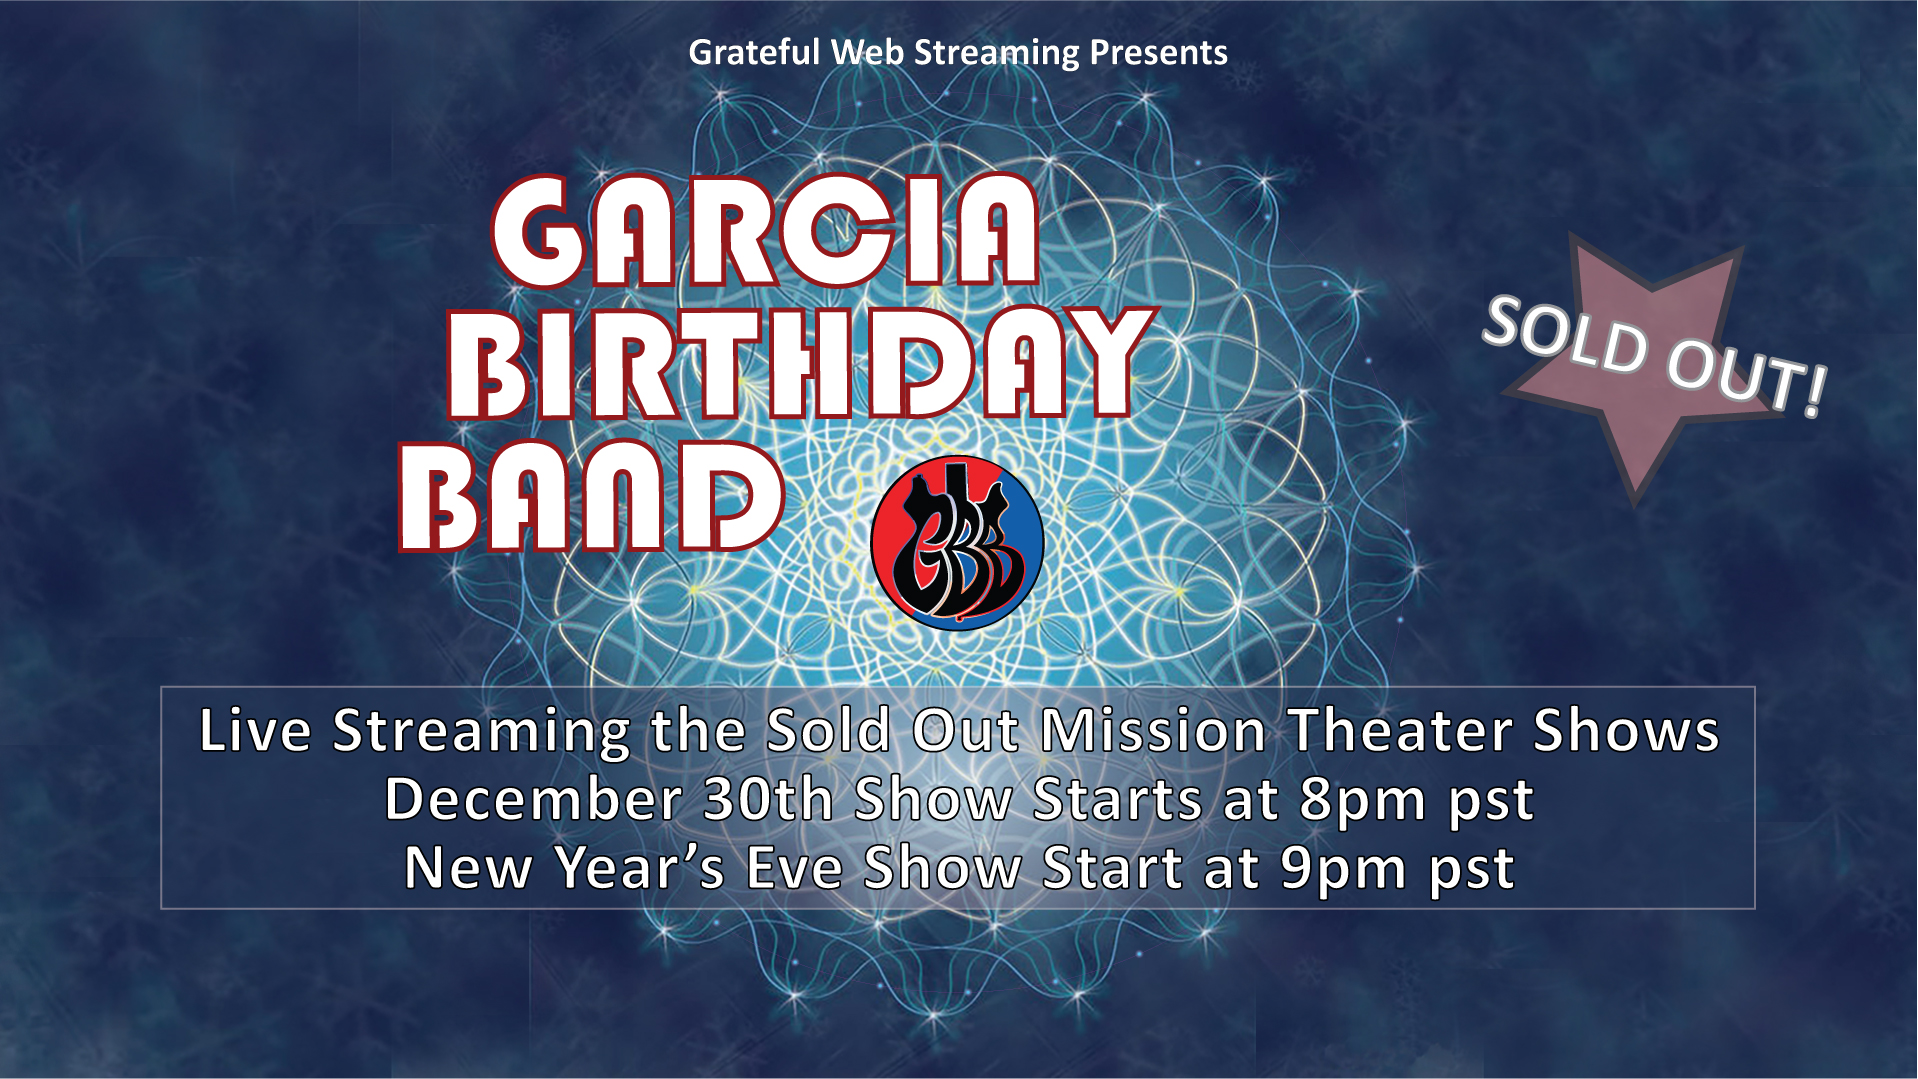 Watch the Live Stream of the Garcia Birthday Band's New Years Run